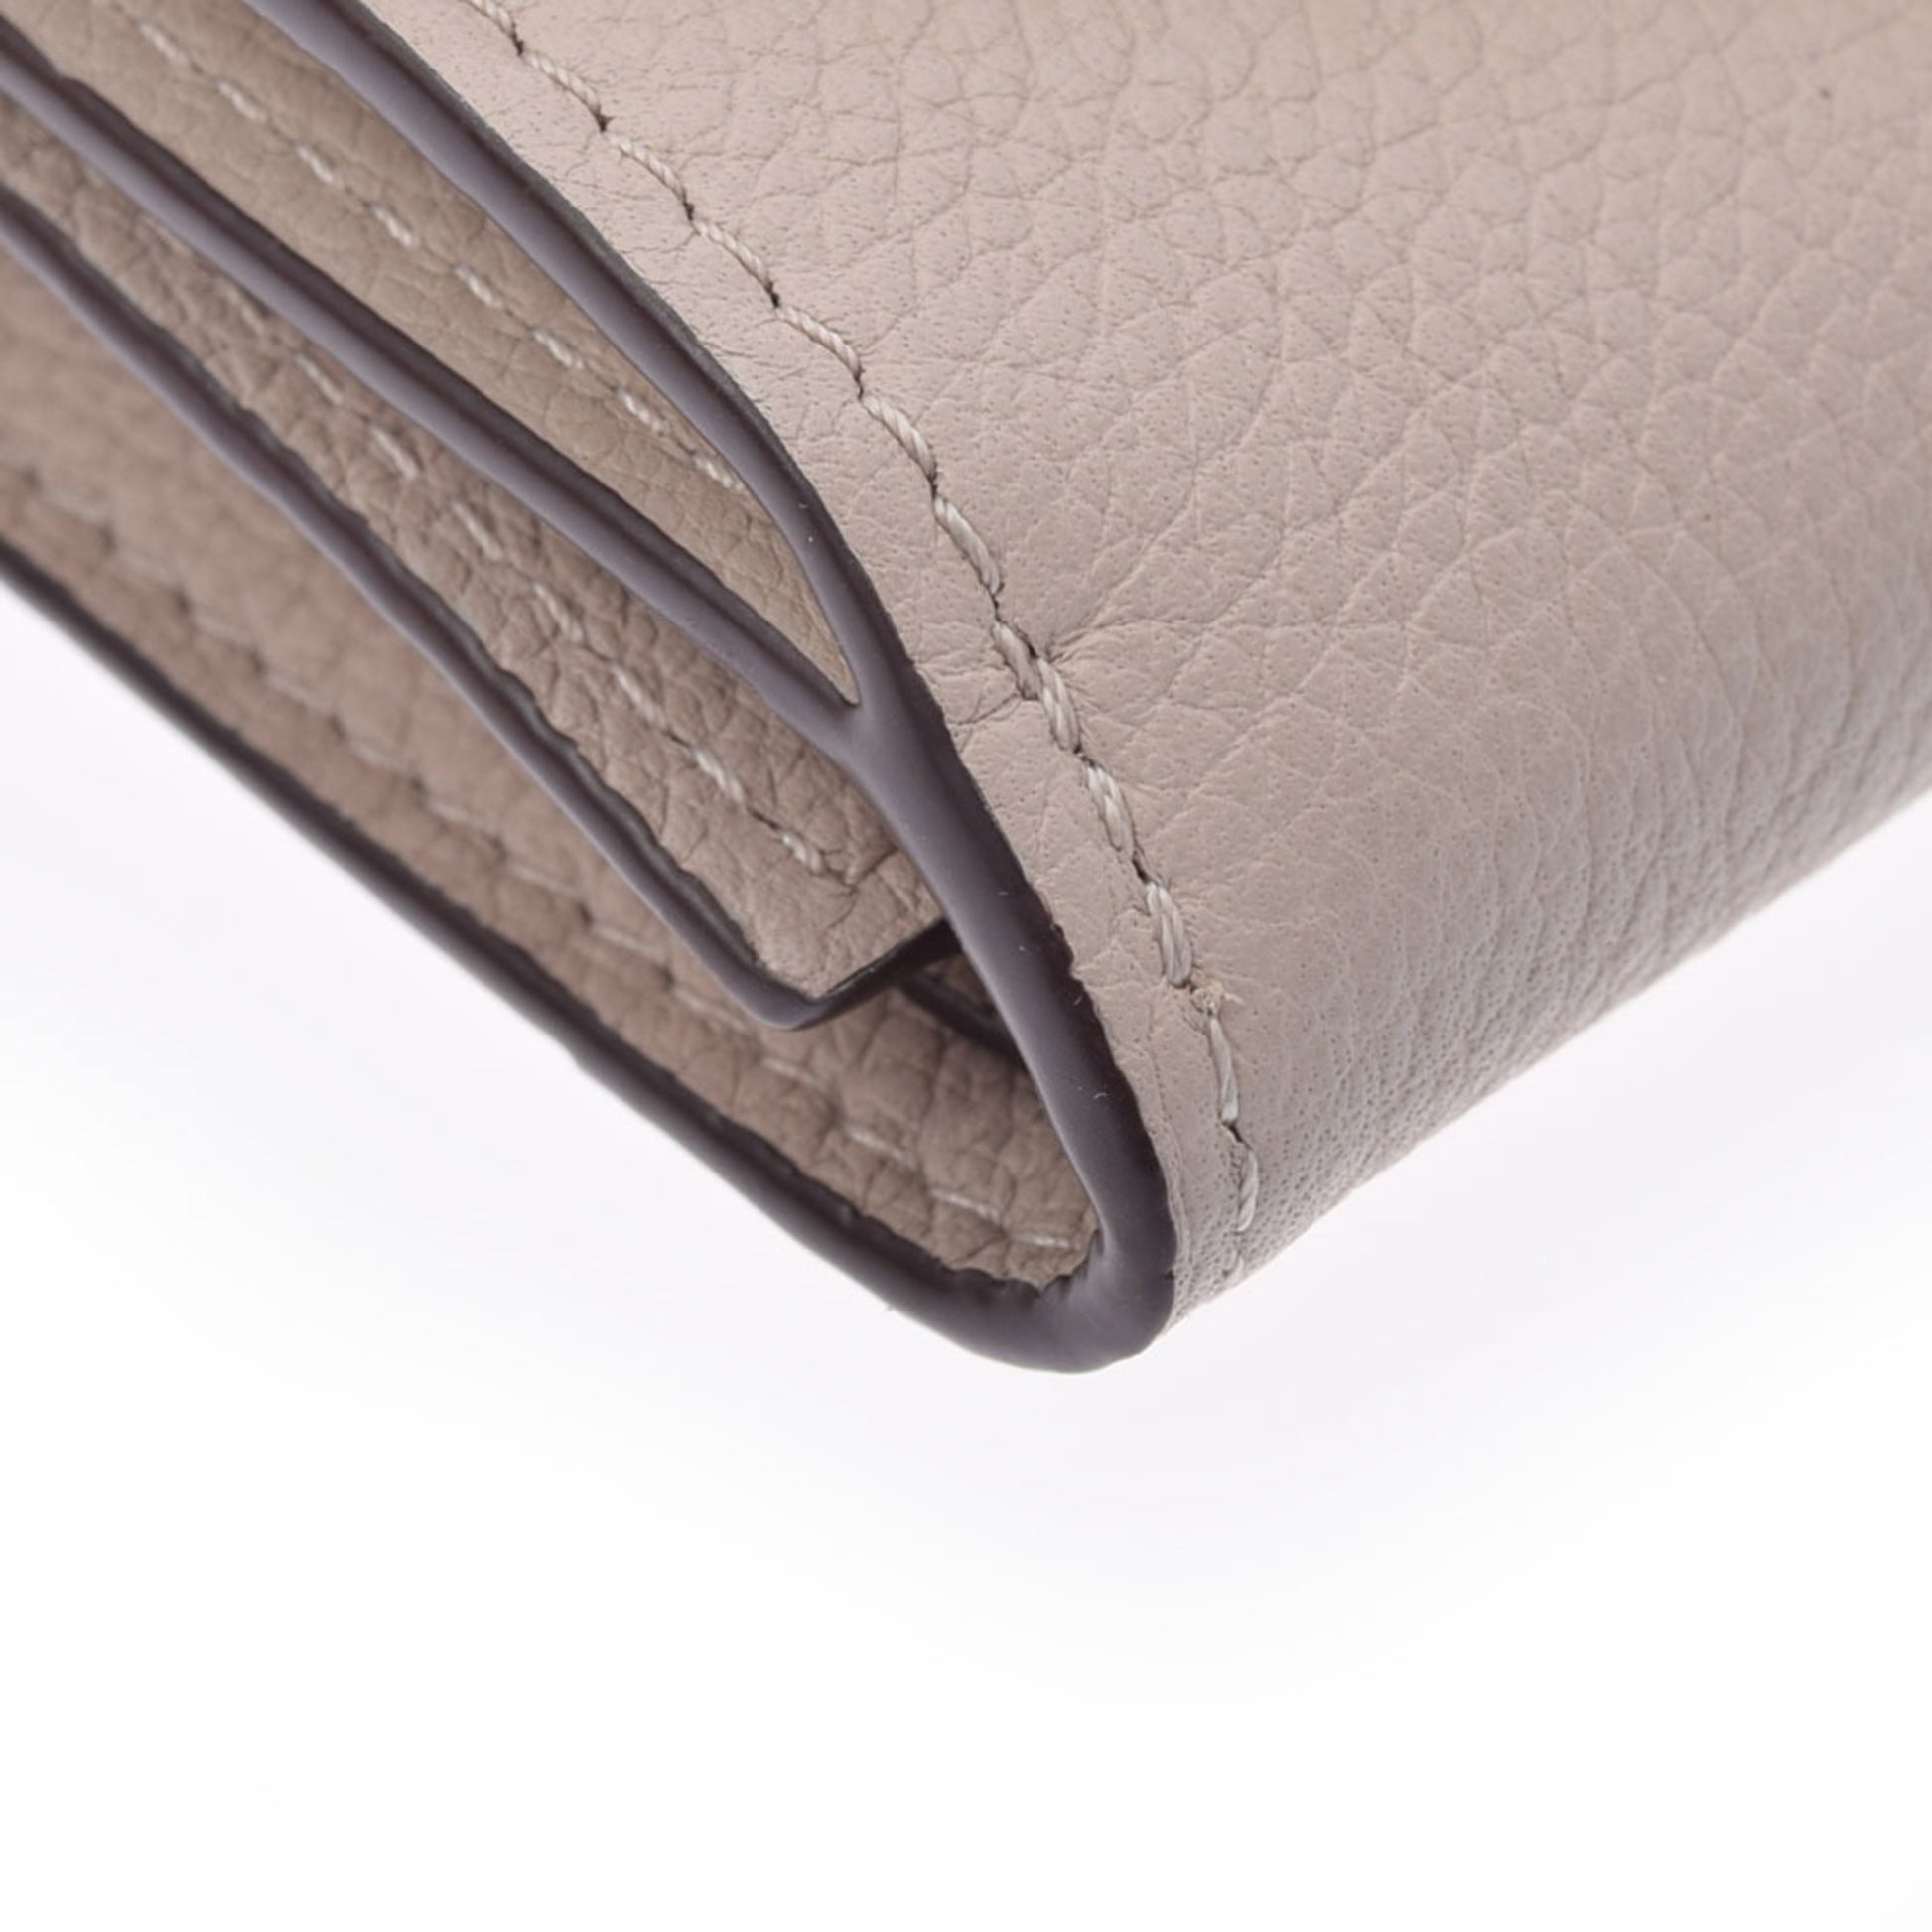 Louis Vuitton Portefeuille Lockmini Greige M69340 Calf Leather